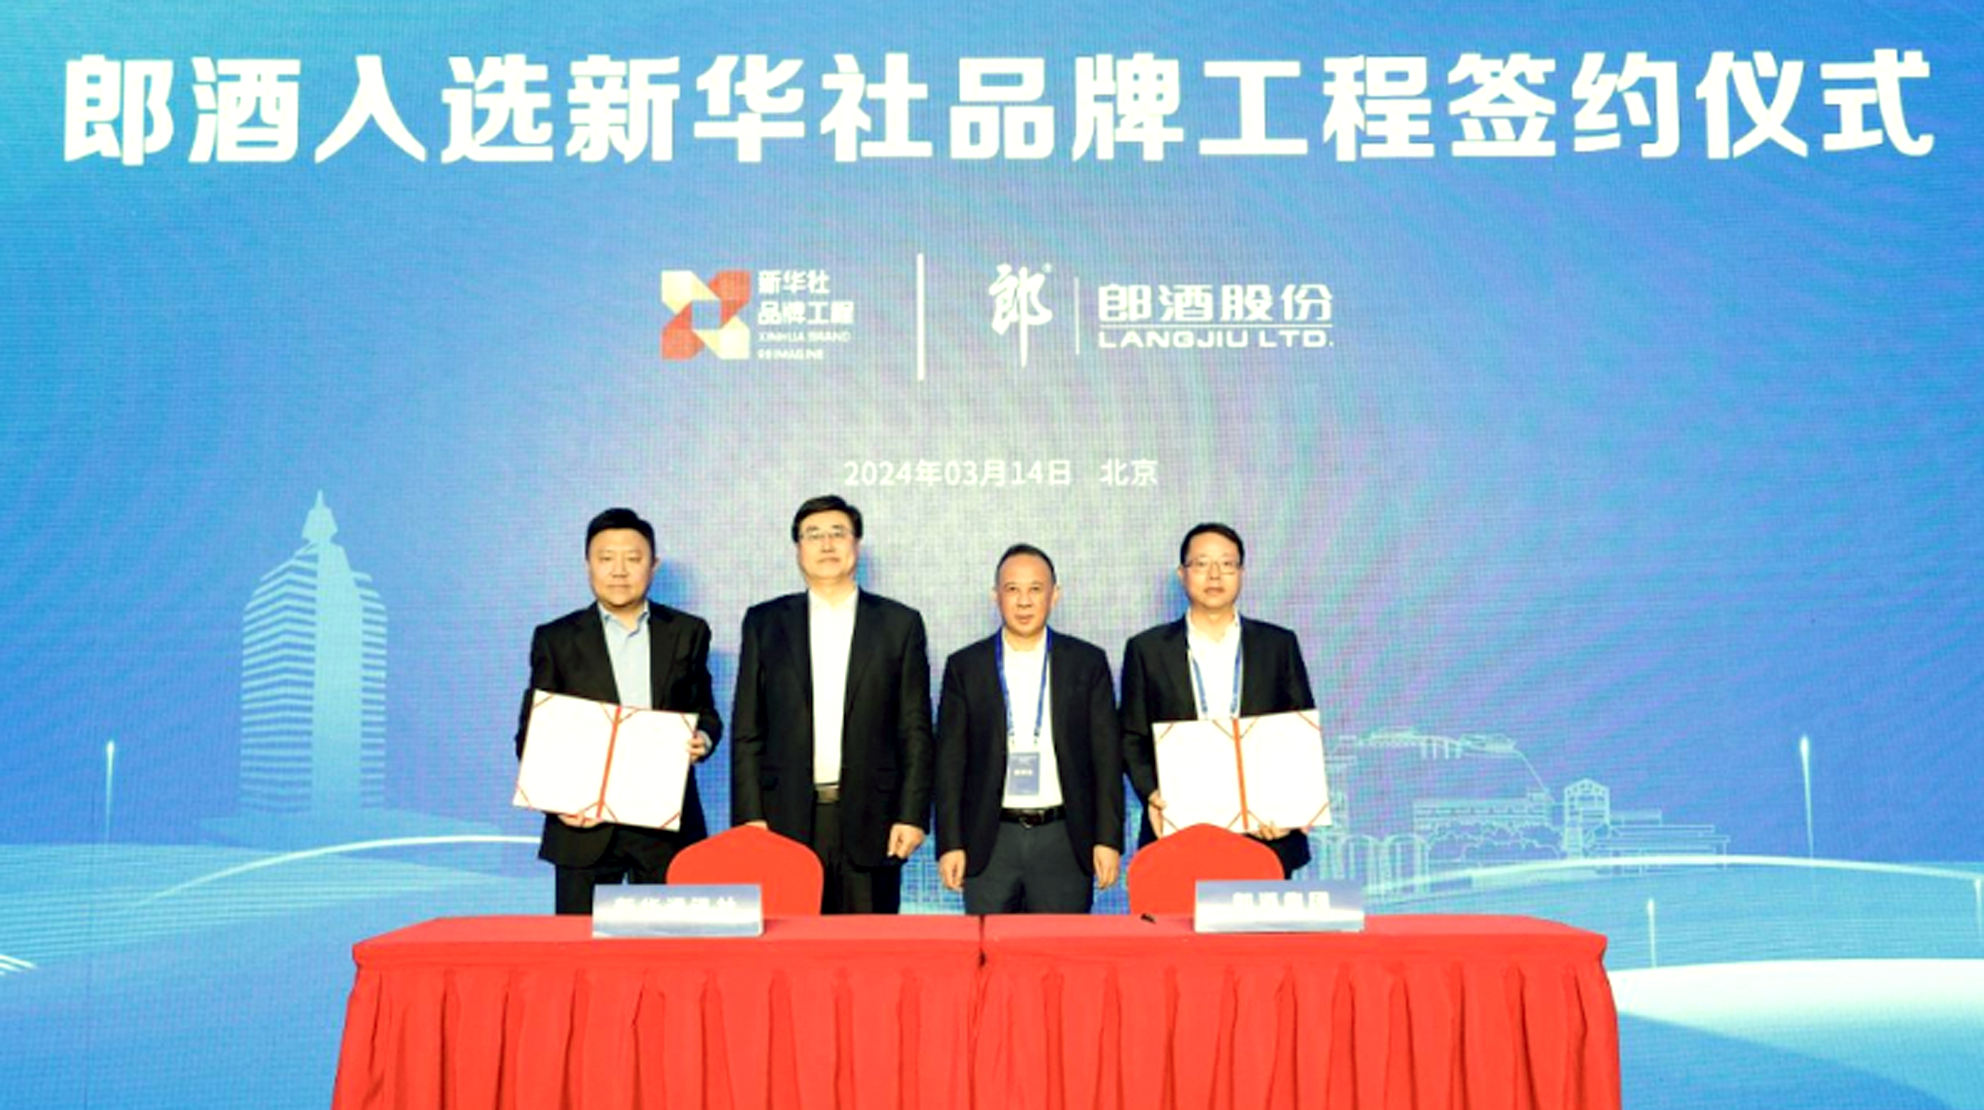 Langjiu Group was selected as Xinhua News Agency brand project